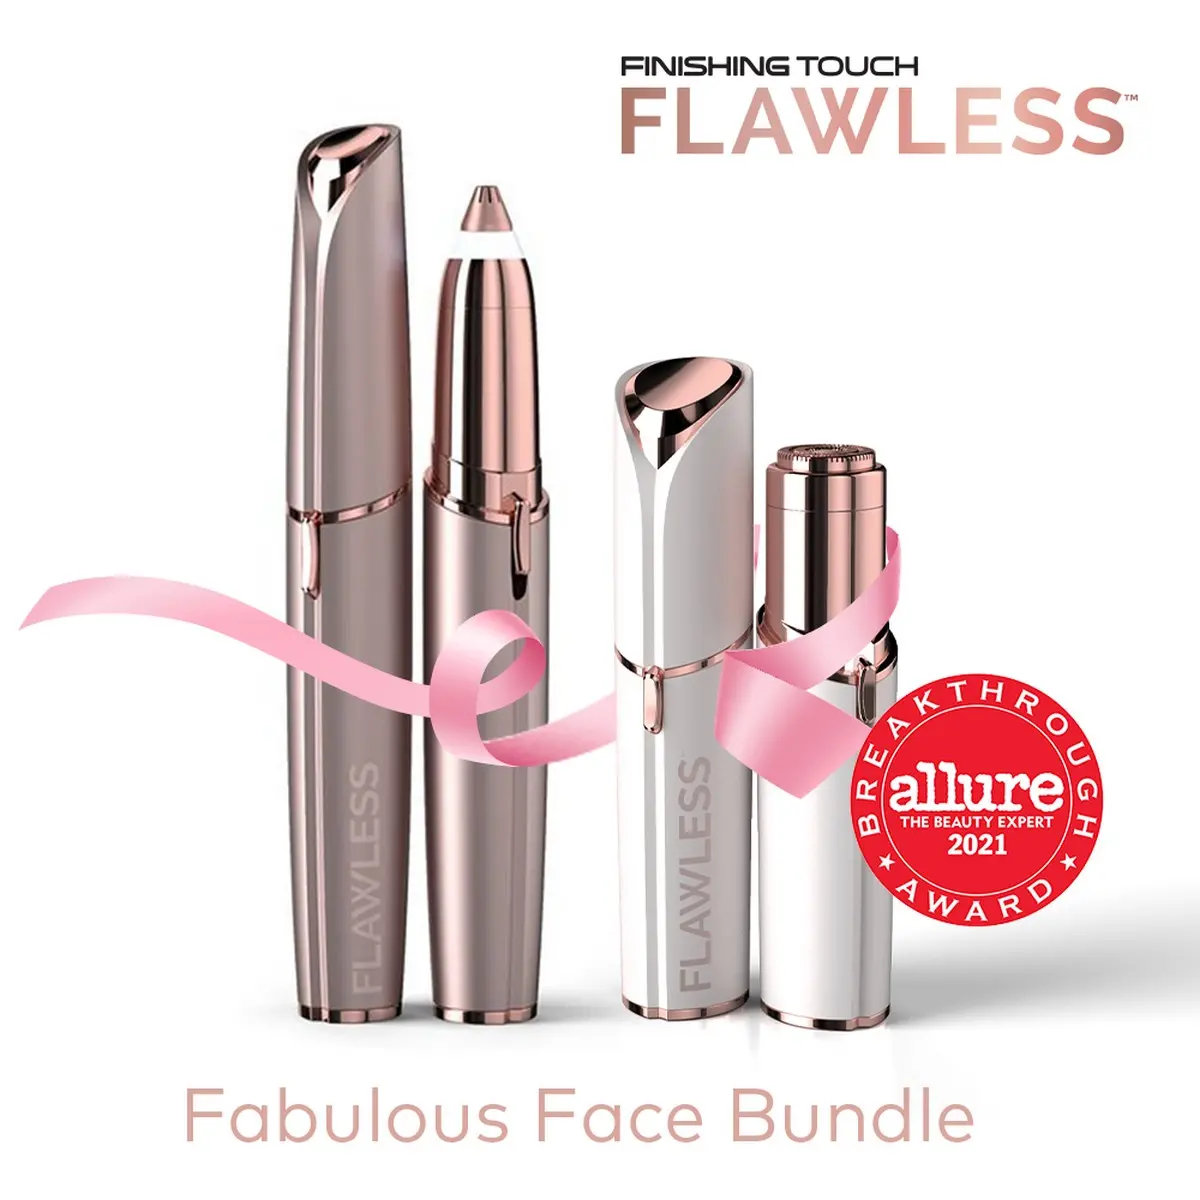 Flawless Finishing Touch Fabulous Face Bundle / set image